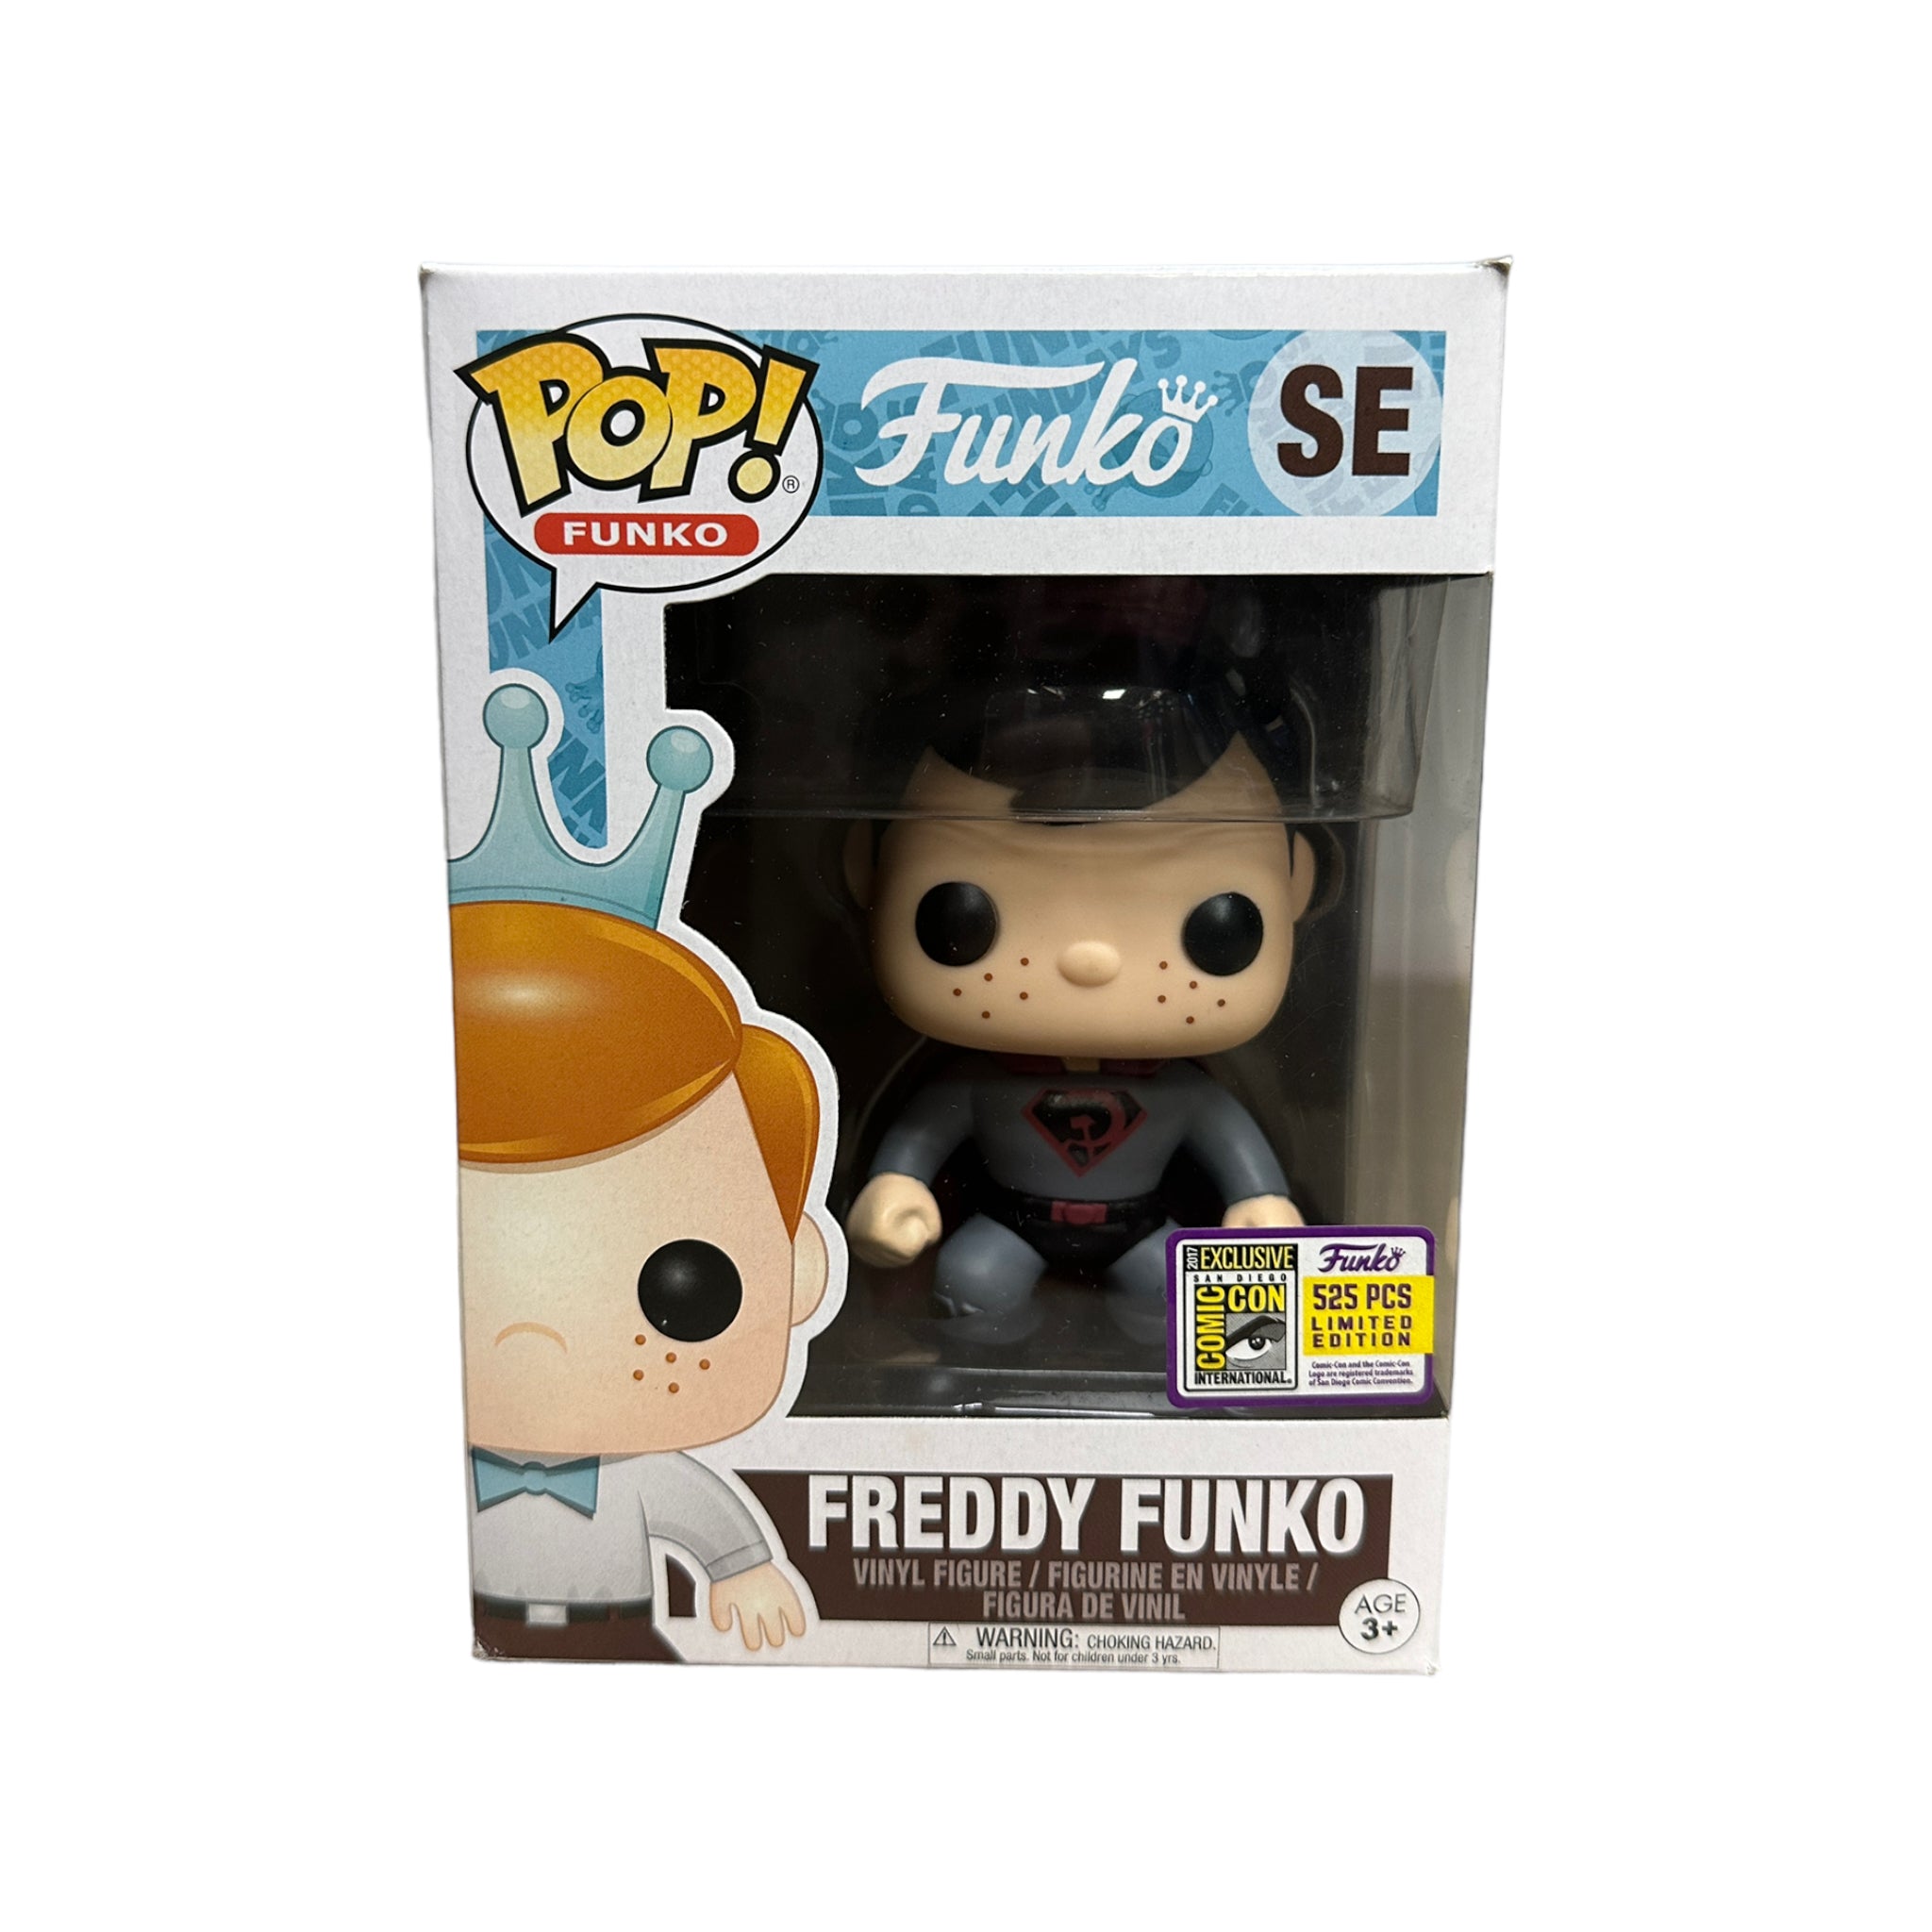 Freddy Funko as Superman Red Son Funko Pop! - SDCC 2017 Exclusive LE525 Pcs - Condition 7.5/10